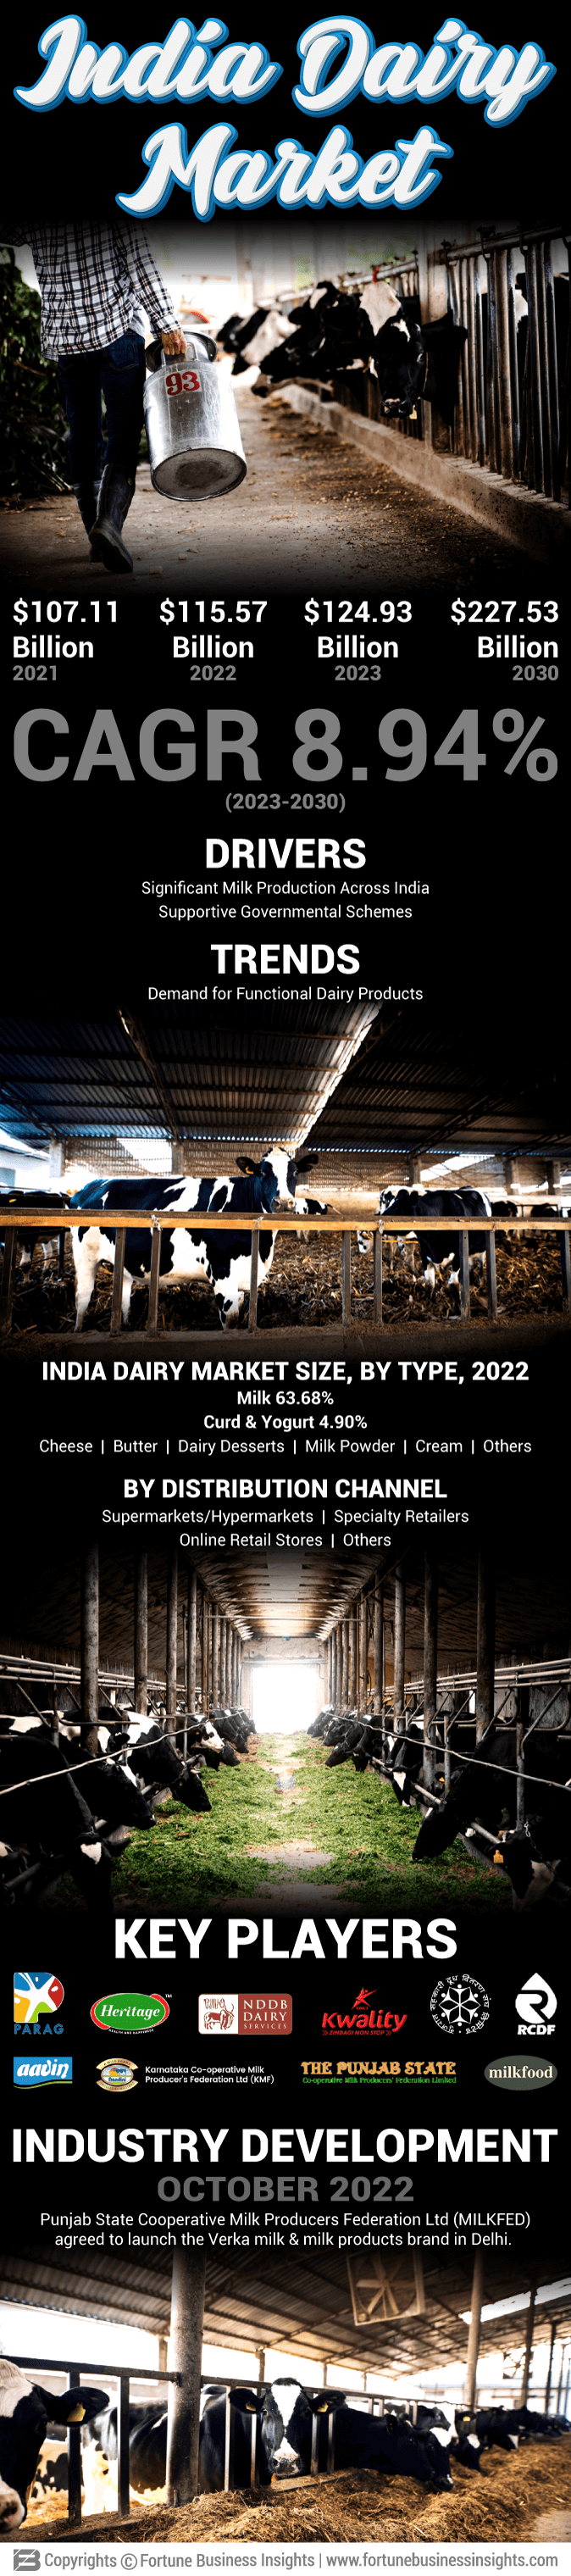 India Dairy Market